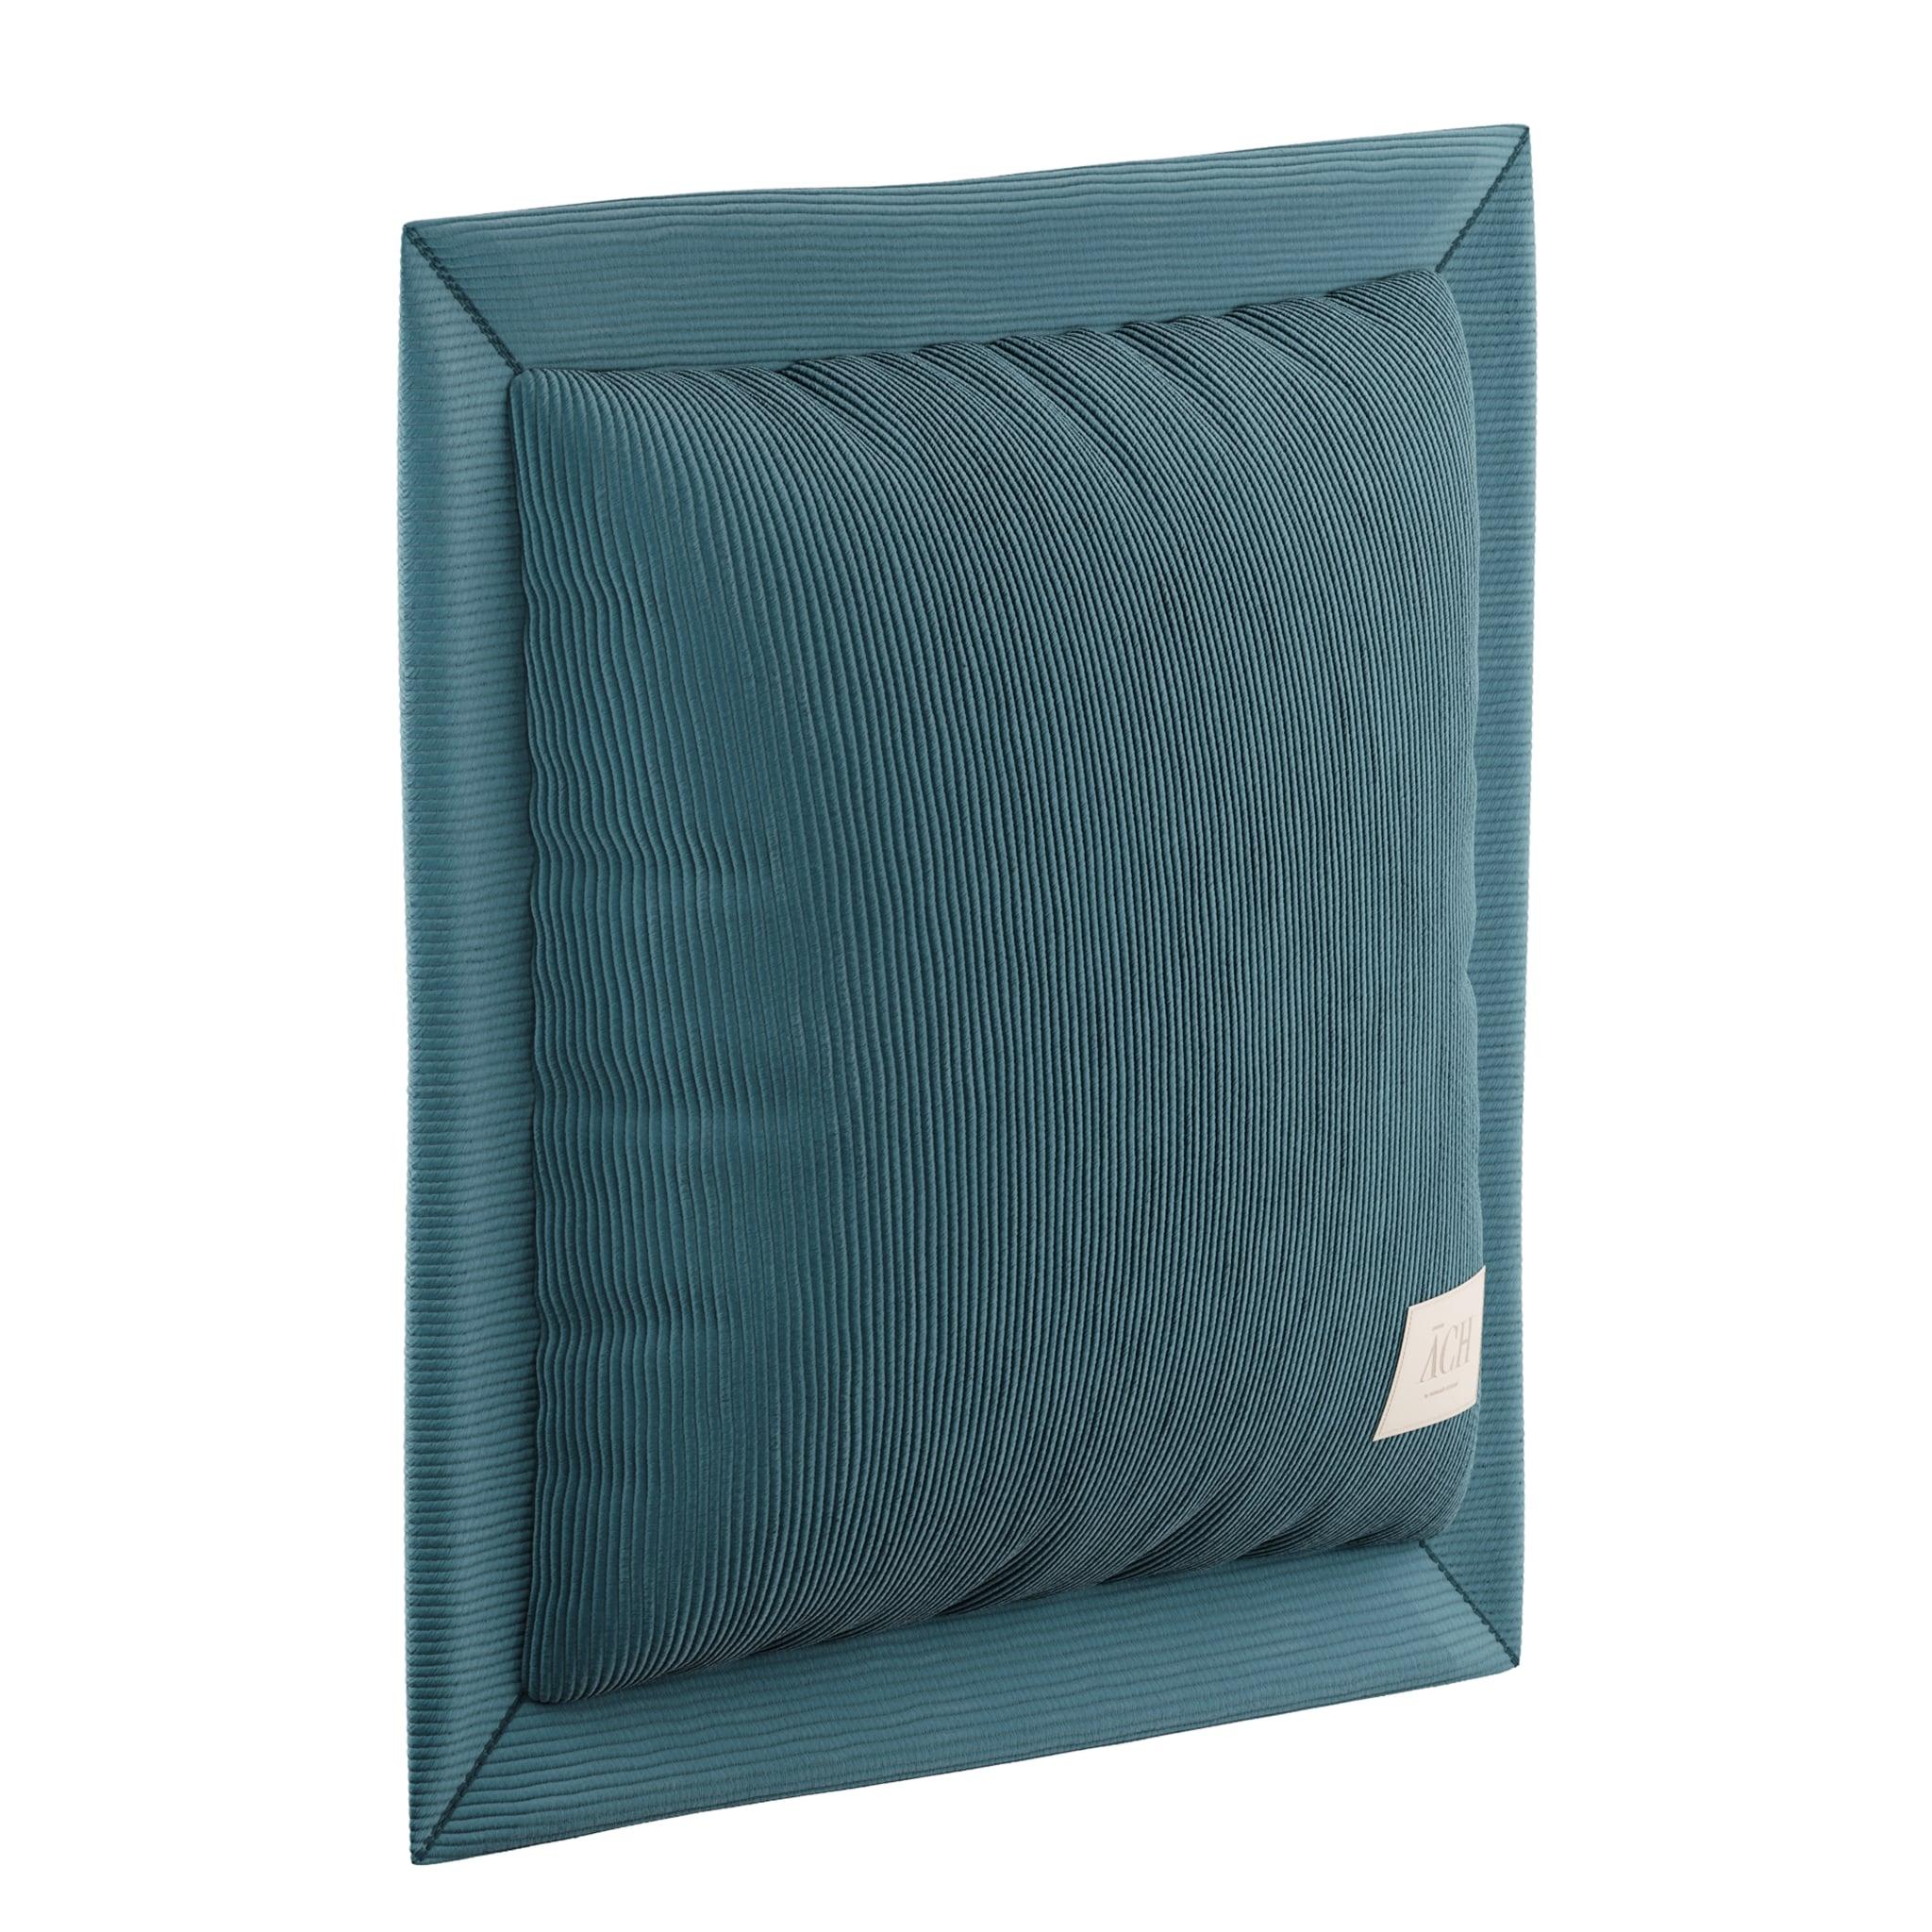 Portuguese Corduroy Navy Square Throw Pillow, Mid-Century Modern Blue Cushion